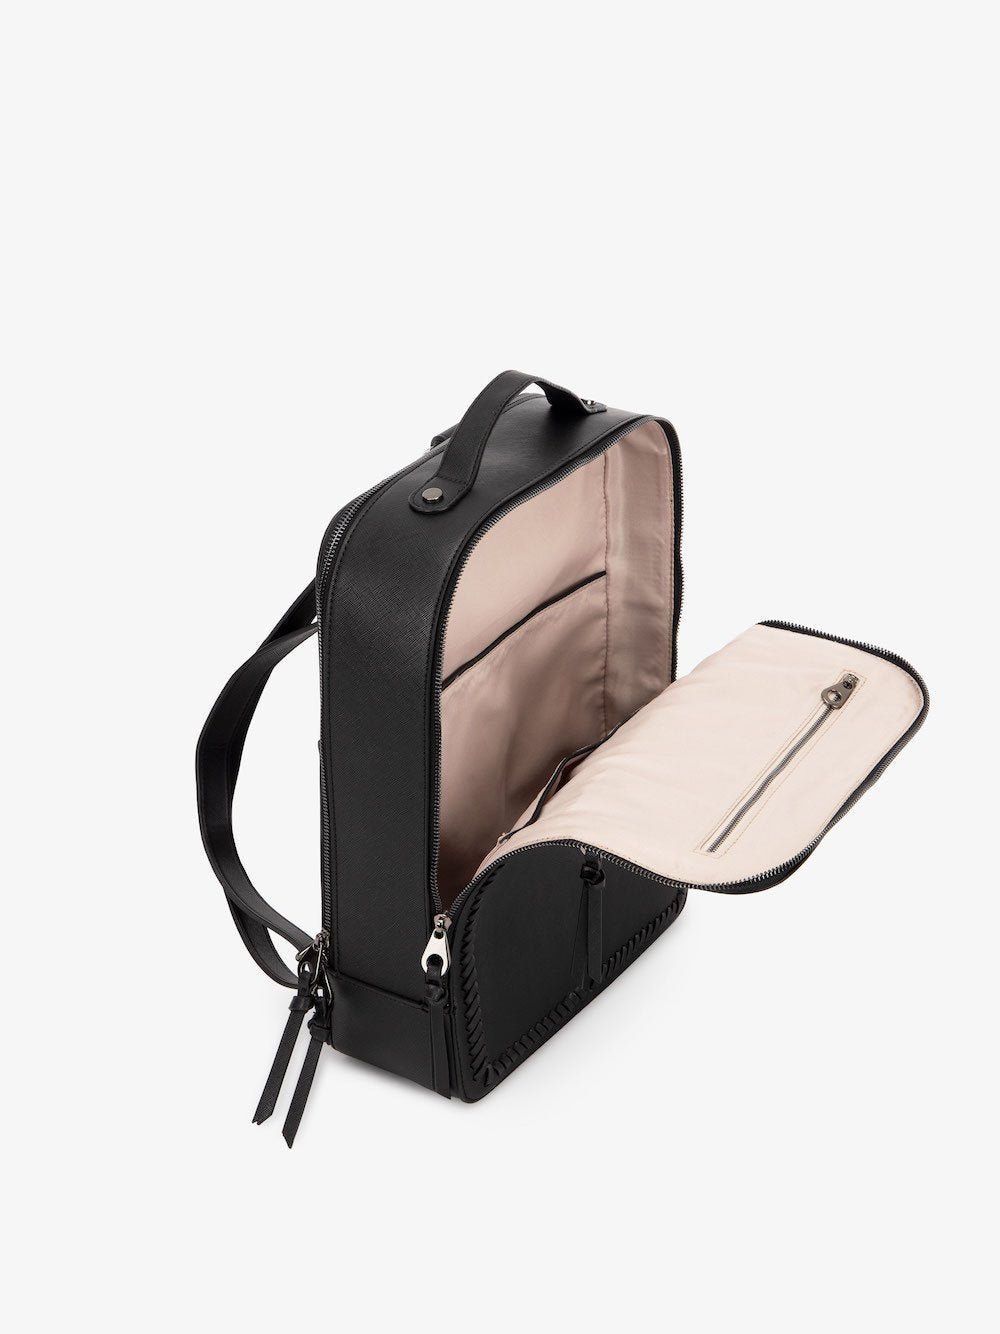 gunmetal black CALPAK Kaya laptop backpack with open compartment